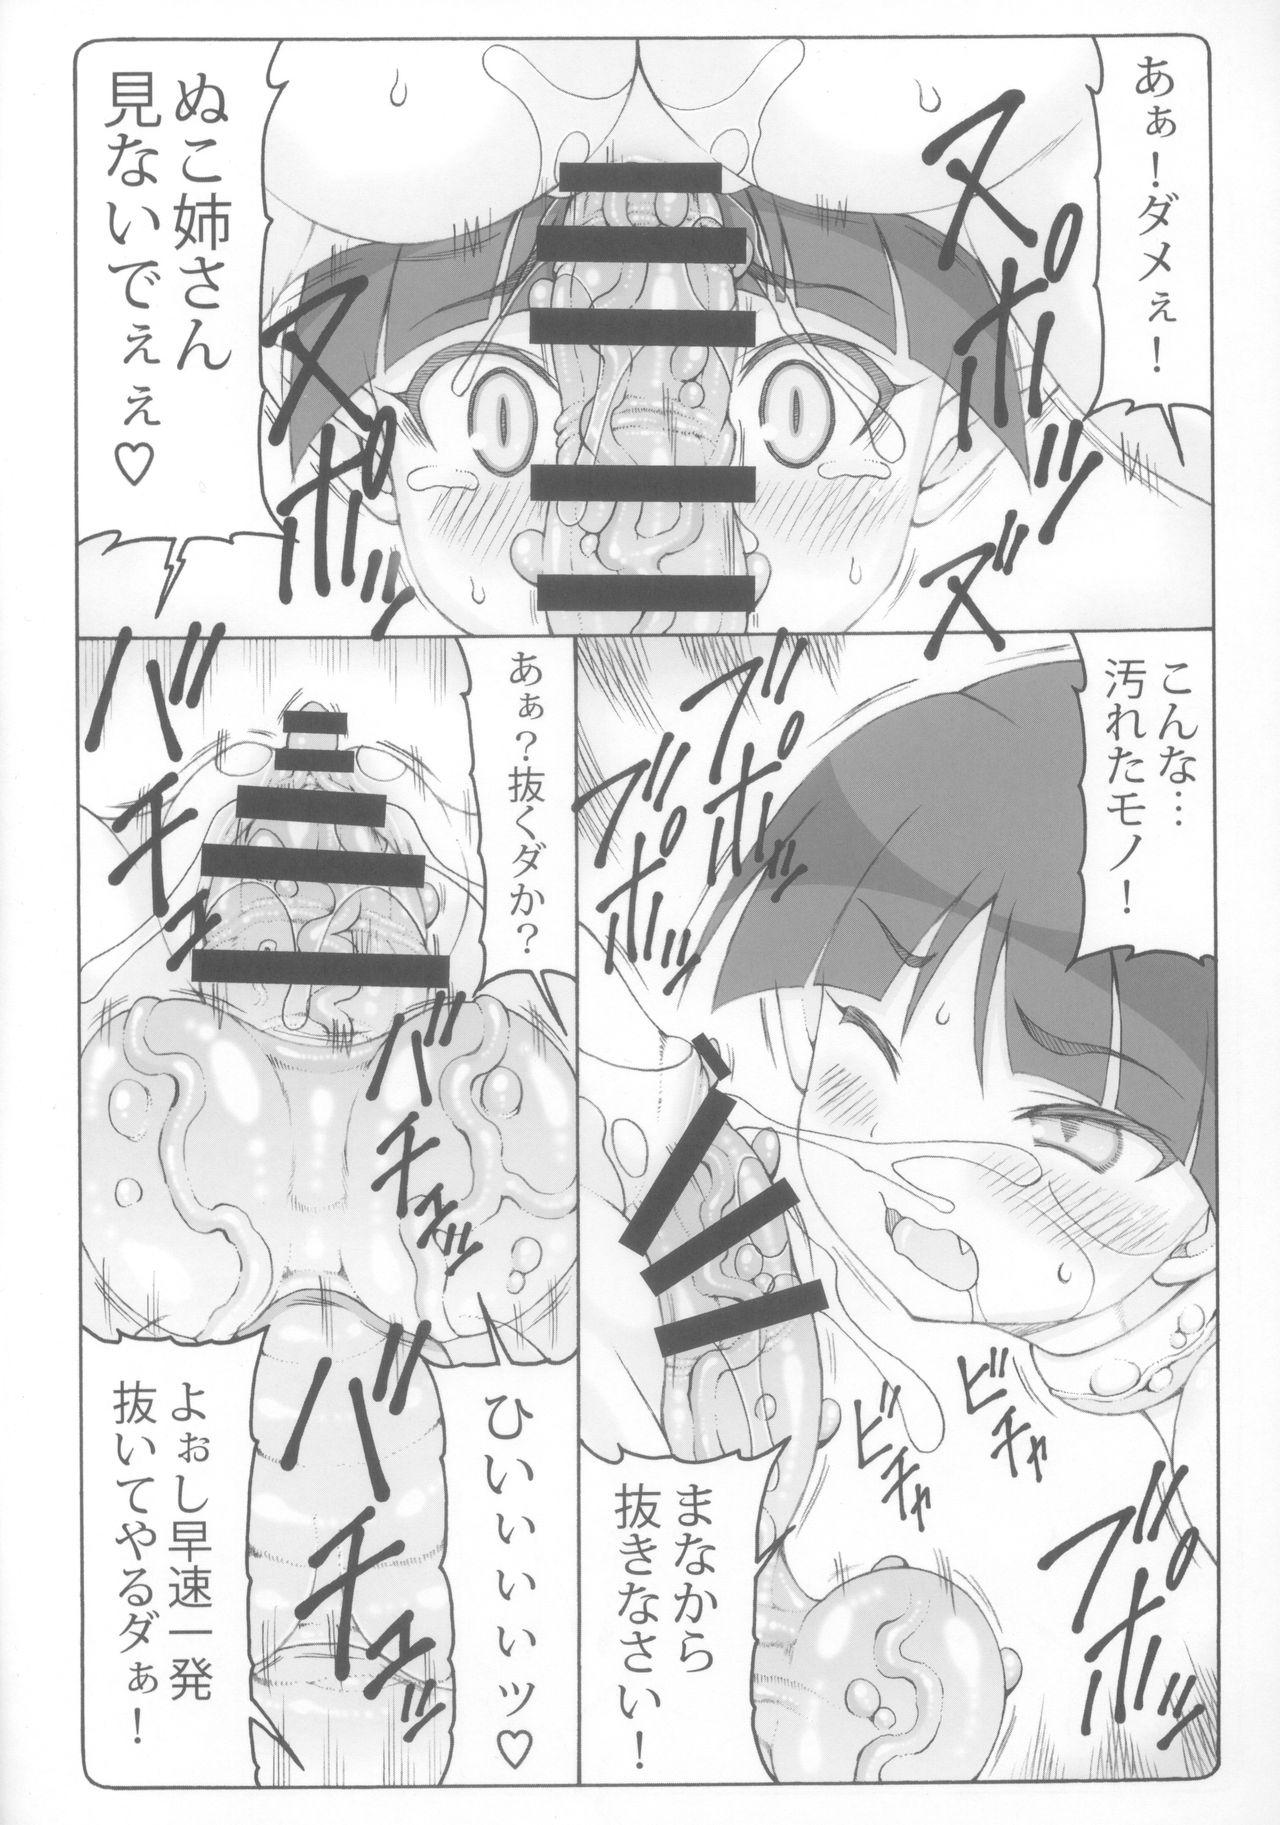 Bbc Nuko Musume vs Youkai Shirikabe 2 - Gegege no kitarou Shesafreak - Page 12